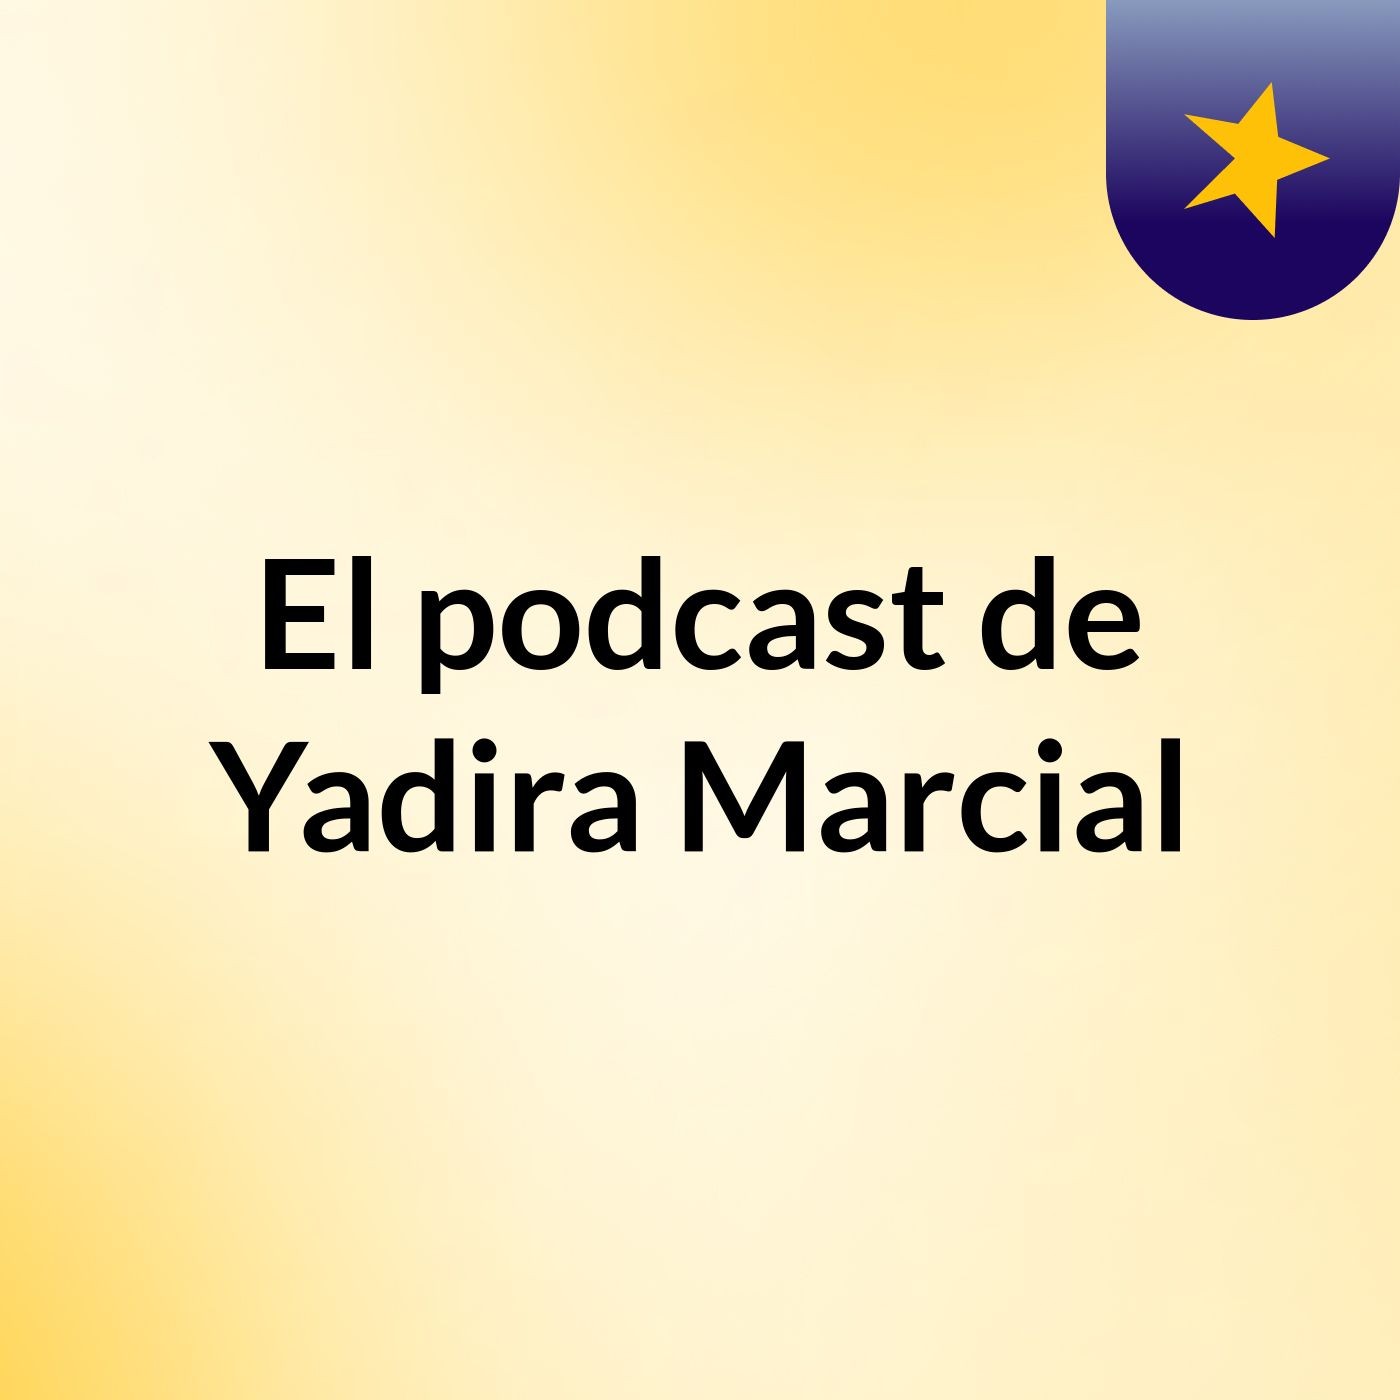 El podcast de Yadira Marcial